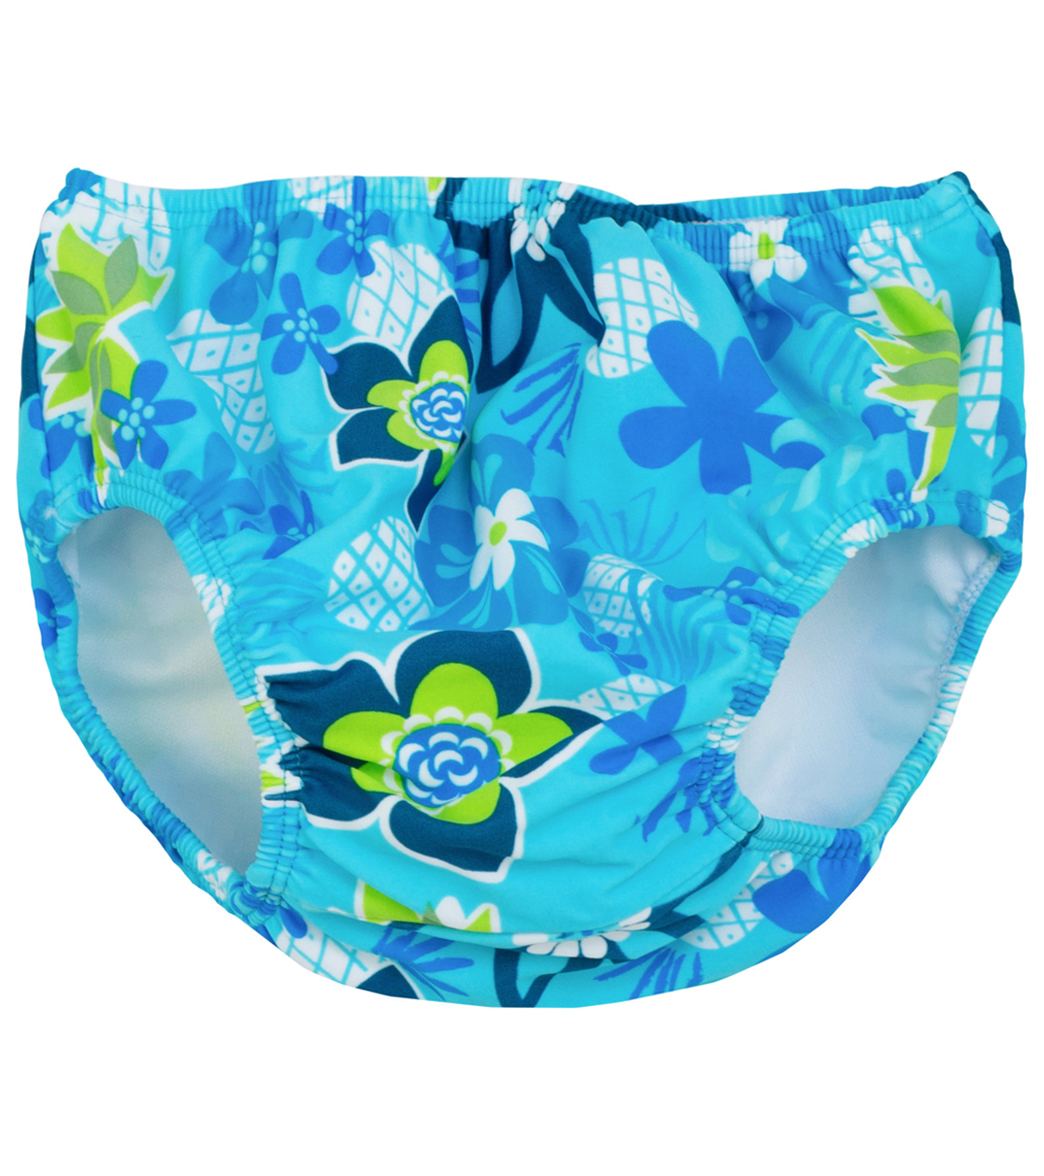 Tuga Girls' Swim Diapers 3 Mo-30 Mo - Cristillo Large 12-18 Mo Size Months - Swimoutlet.com